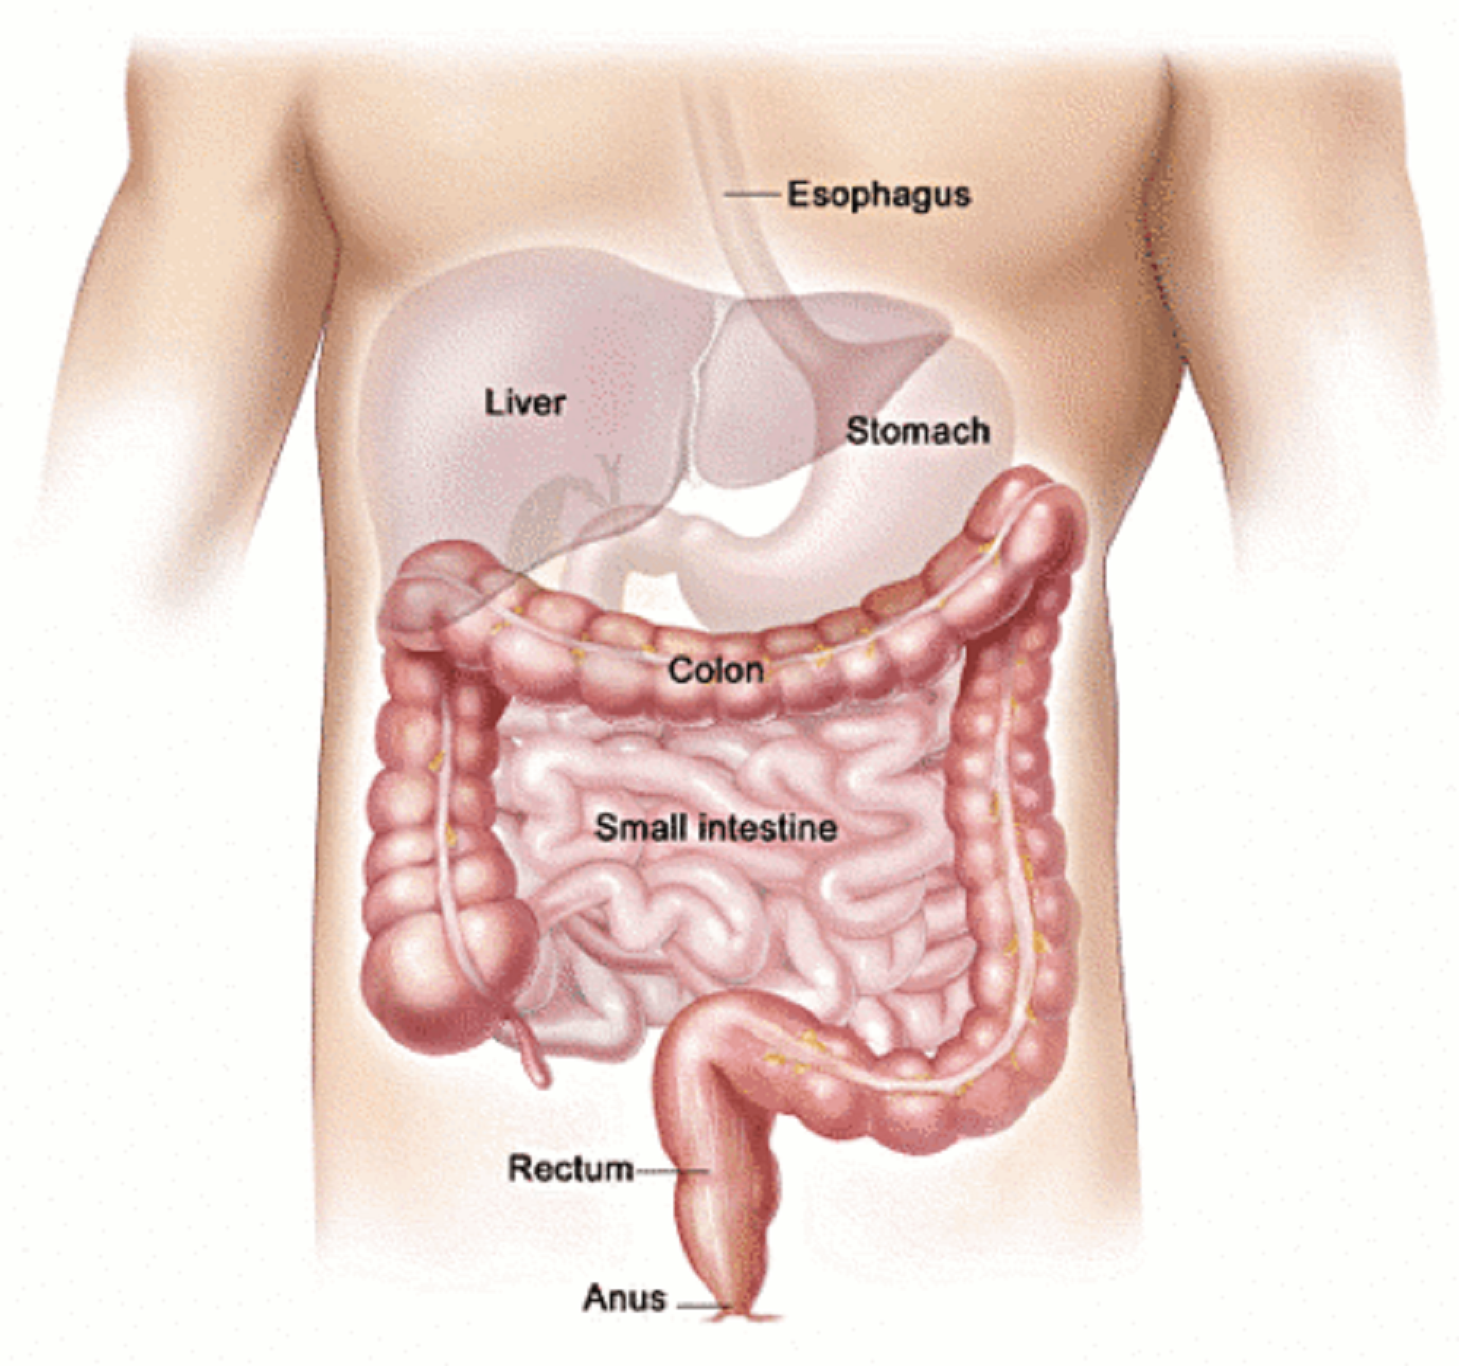 hiatus hernia digestive system gut